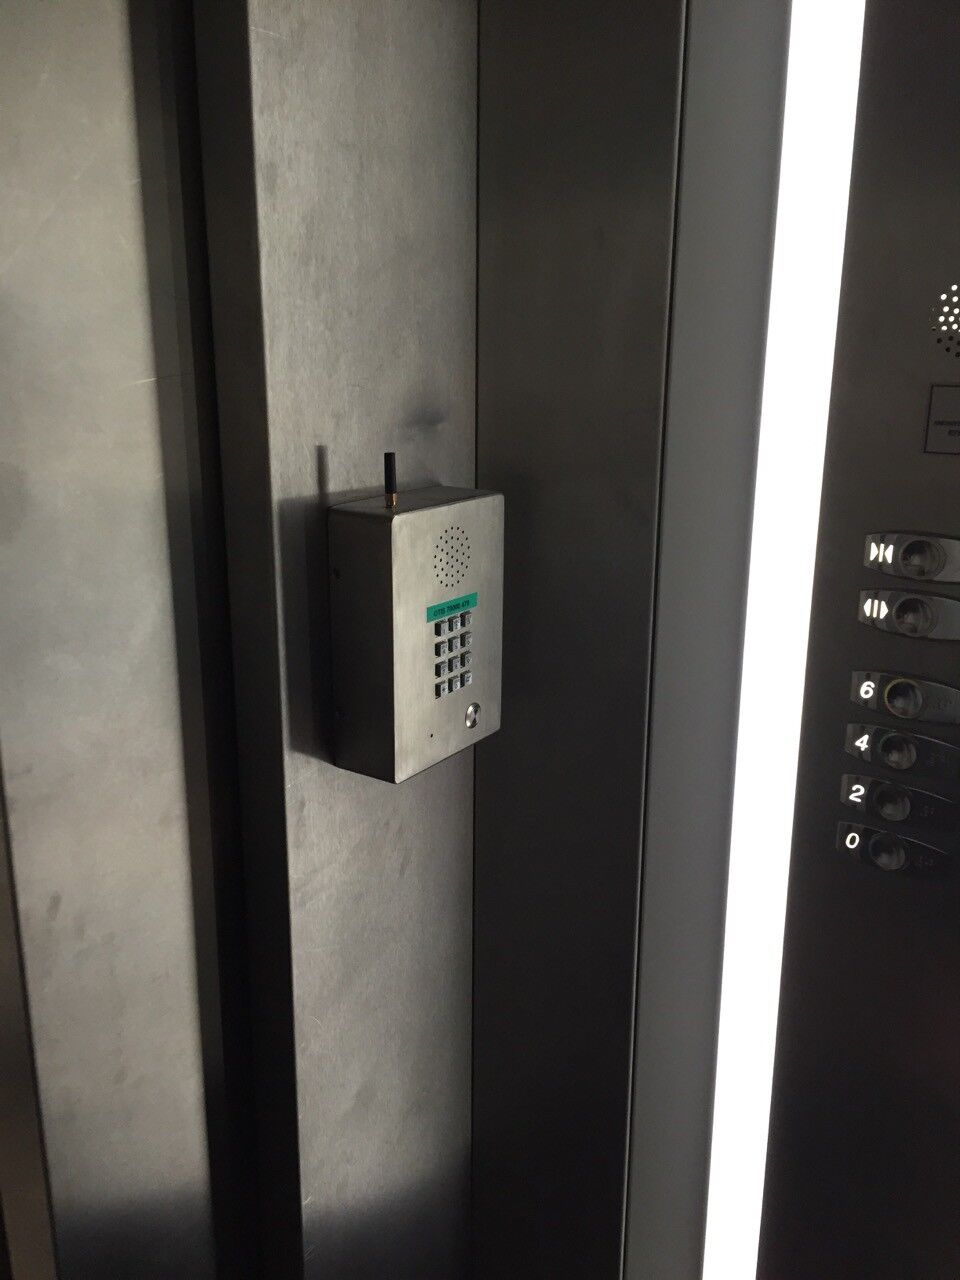 Handsfree Telephone | Handsfree elevator telephone | Elevator emergency ...